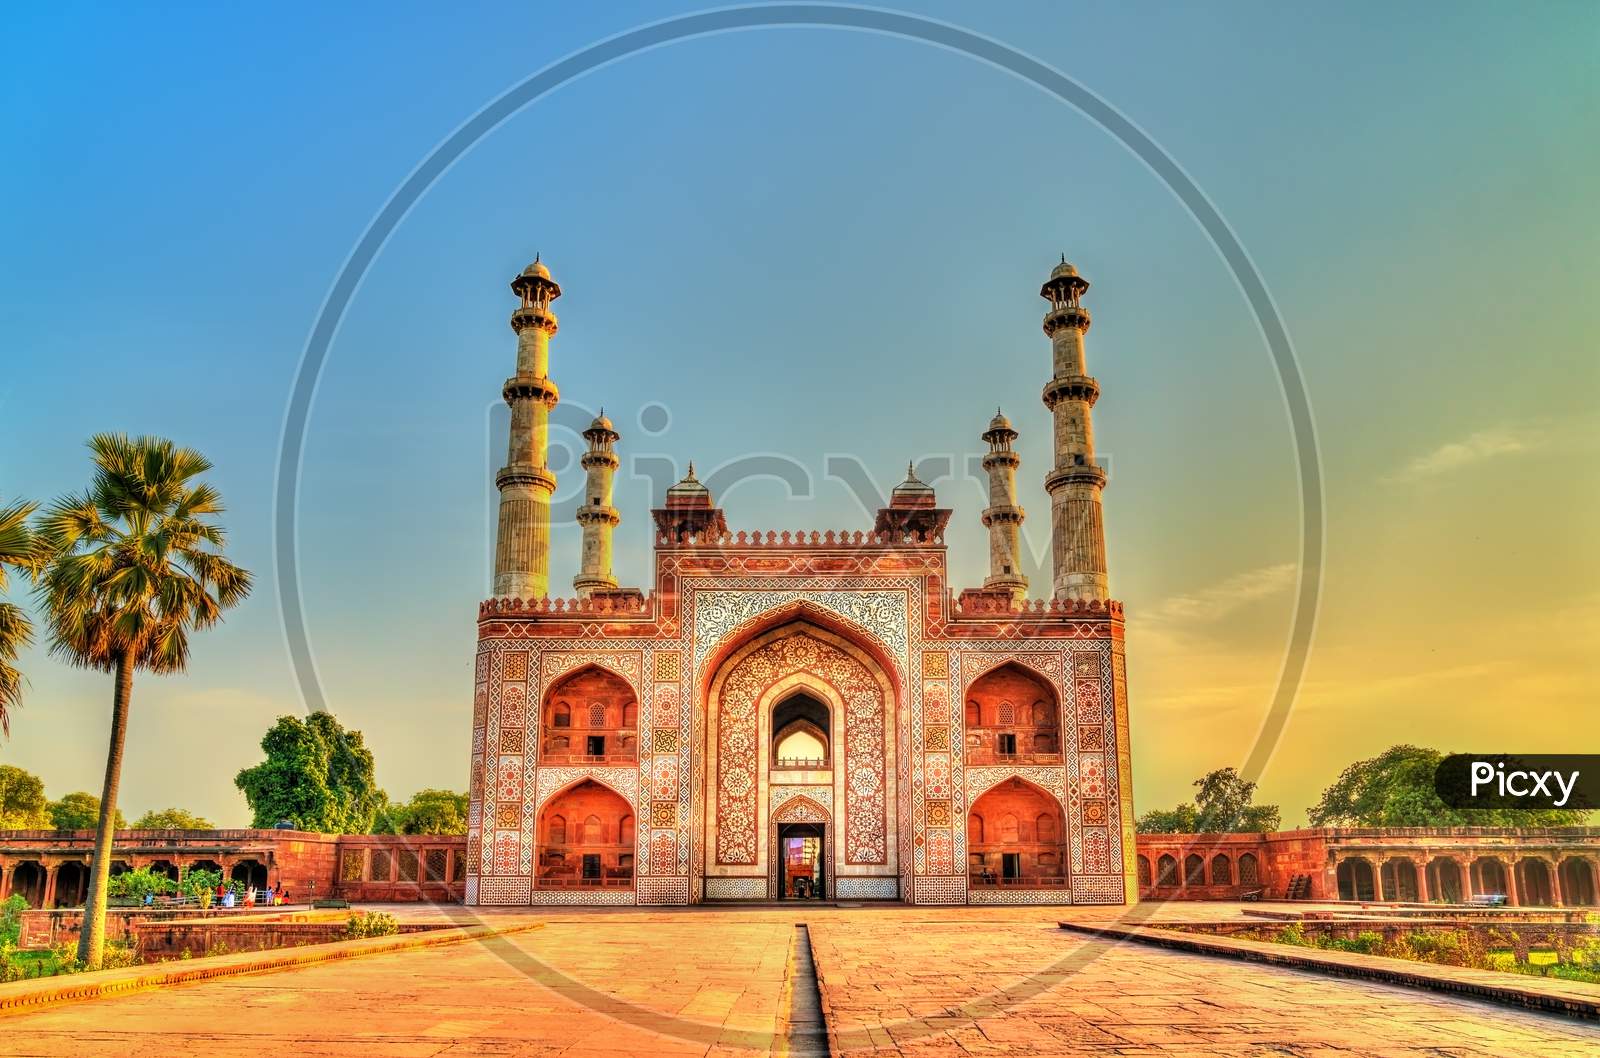 South Gate Of Sikandra Fort In Agra - Uttar Pradesh, India